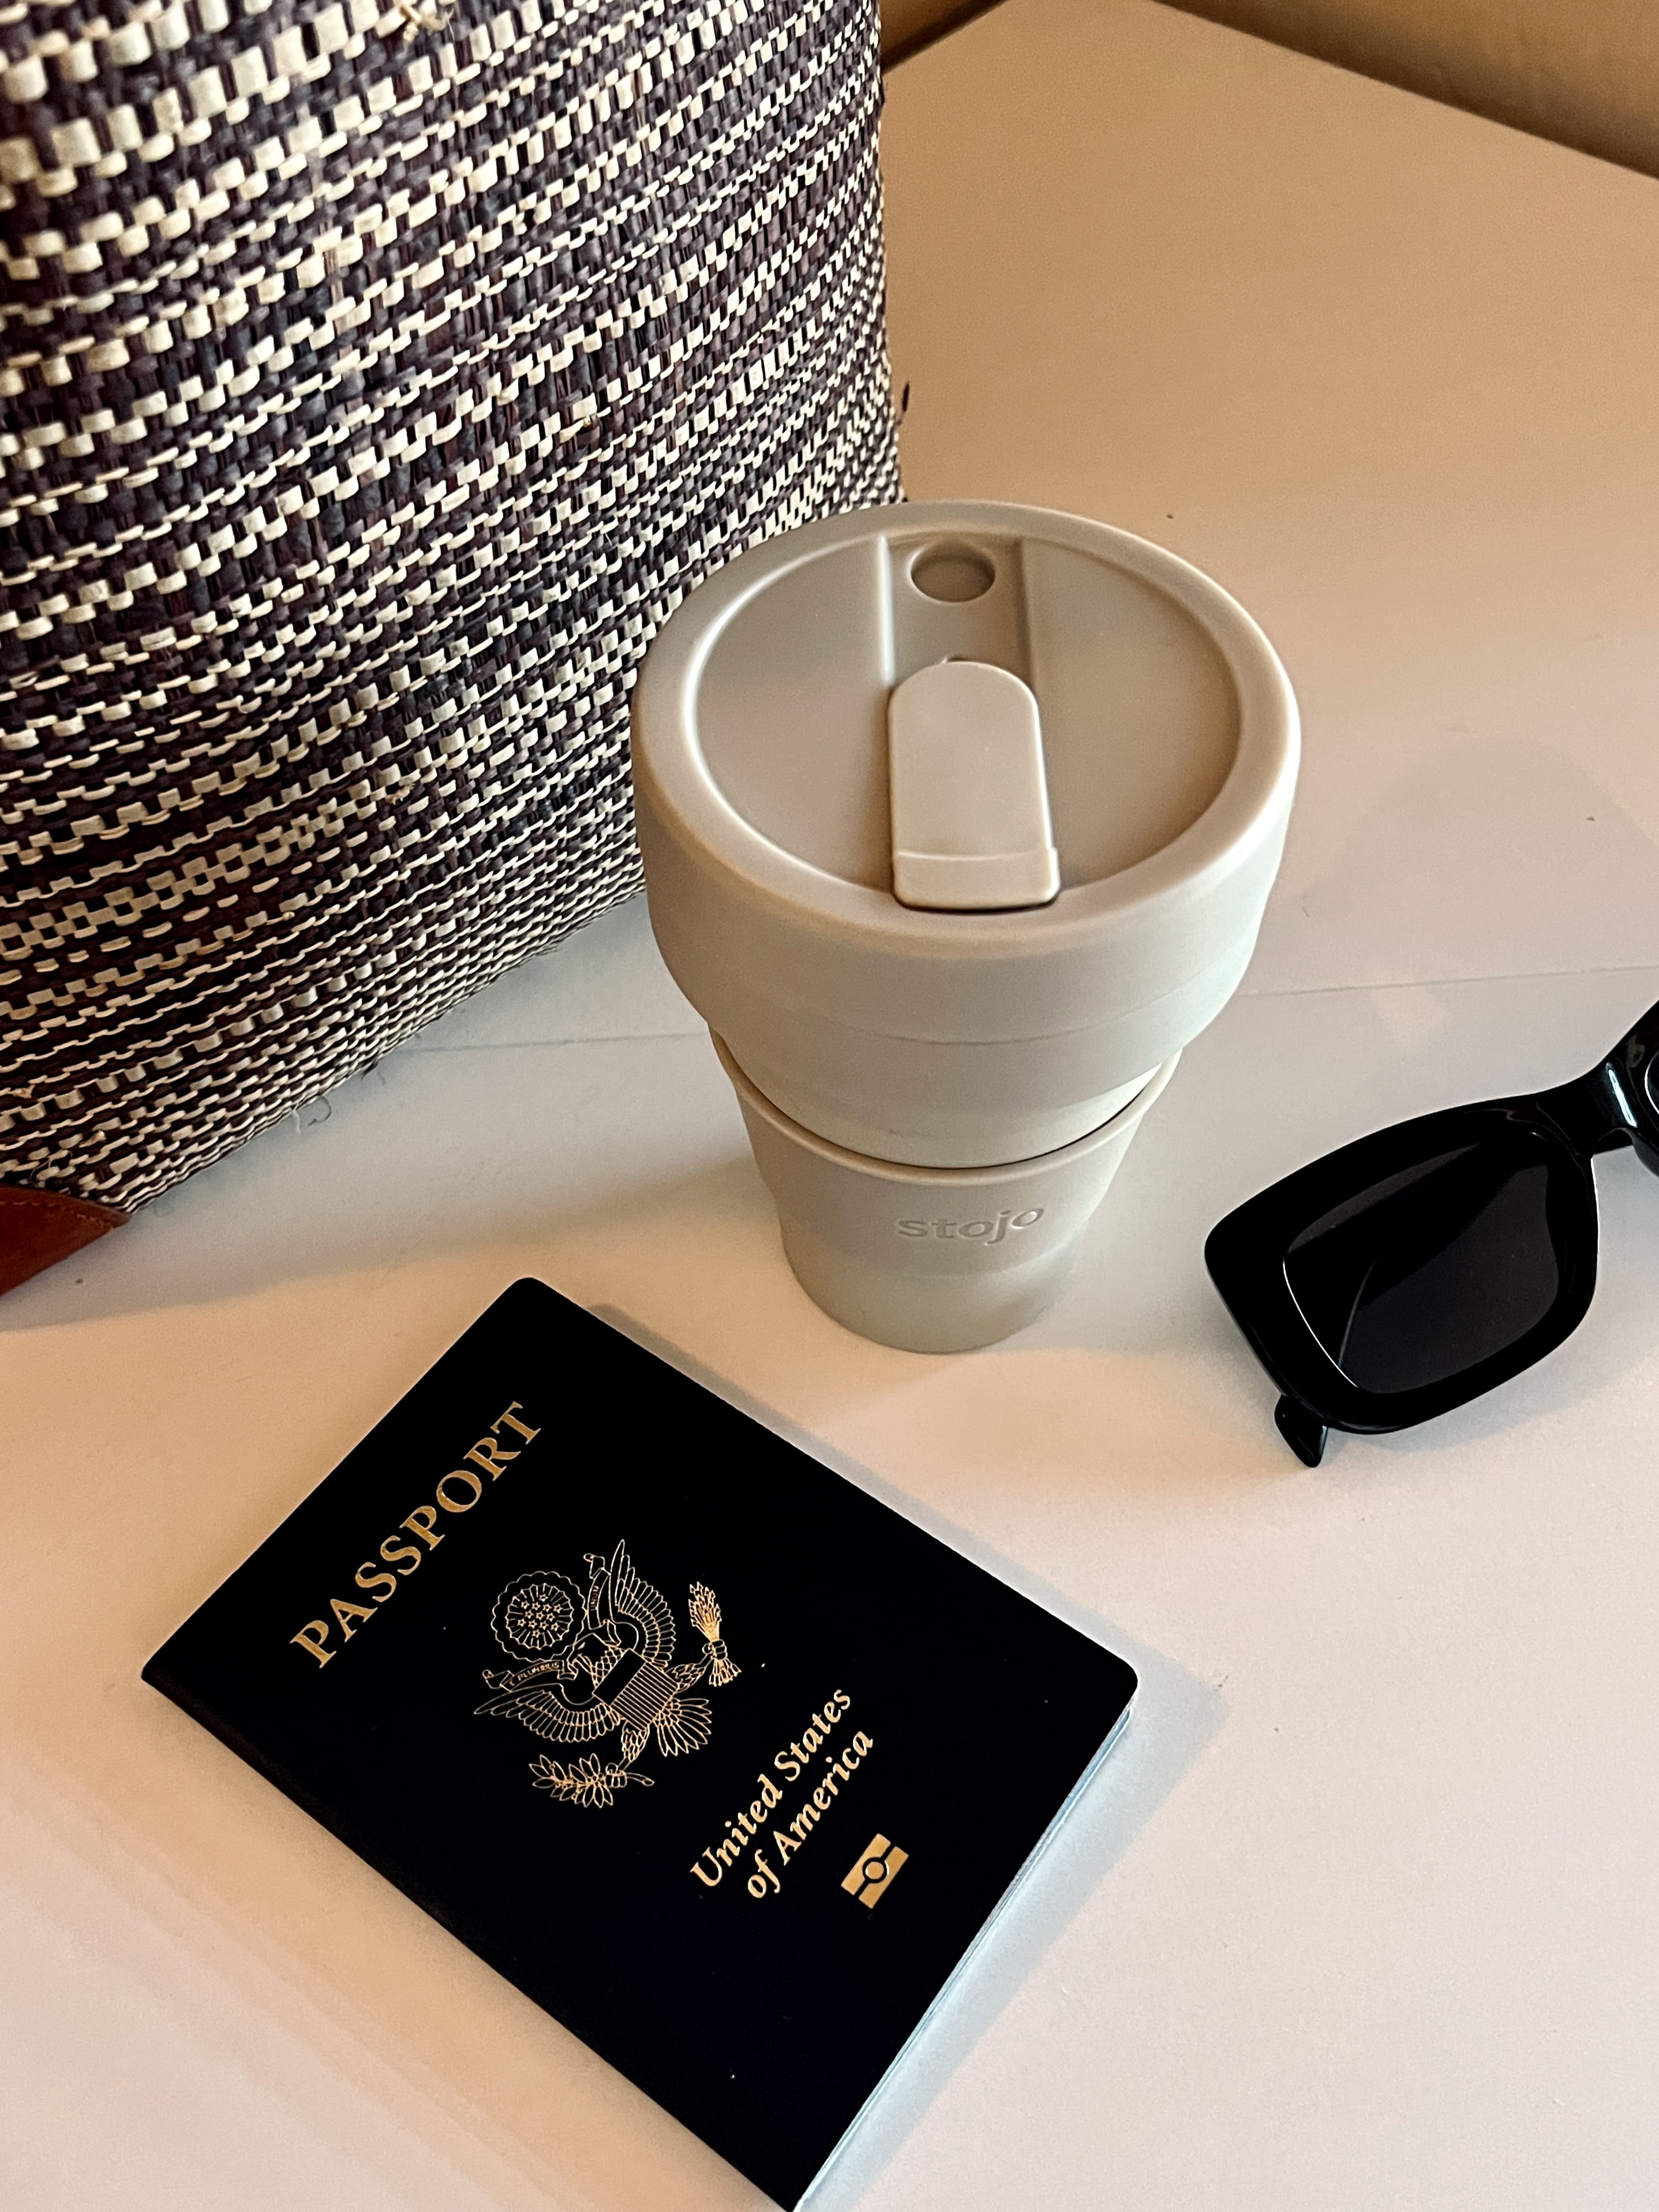 Coffee Cups Travel Coffee Mug With Stir Travel Easy Go Cup